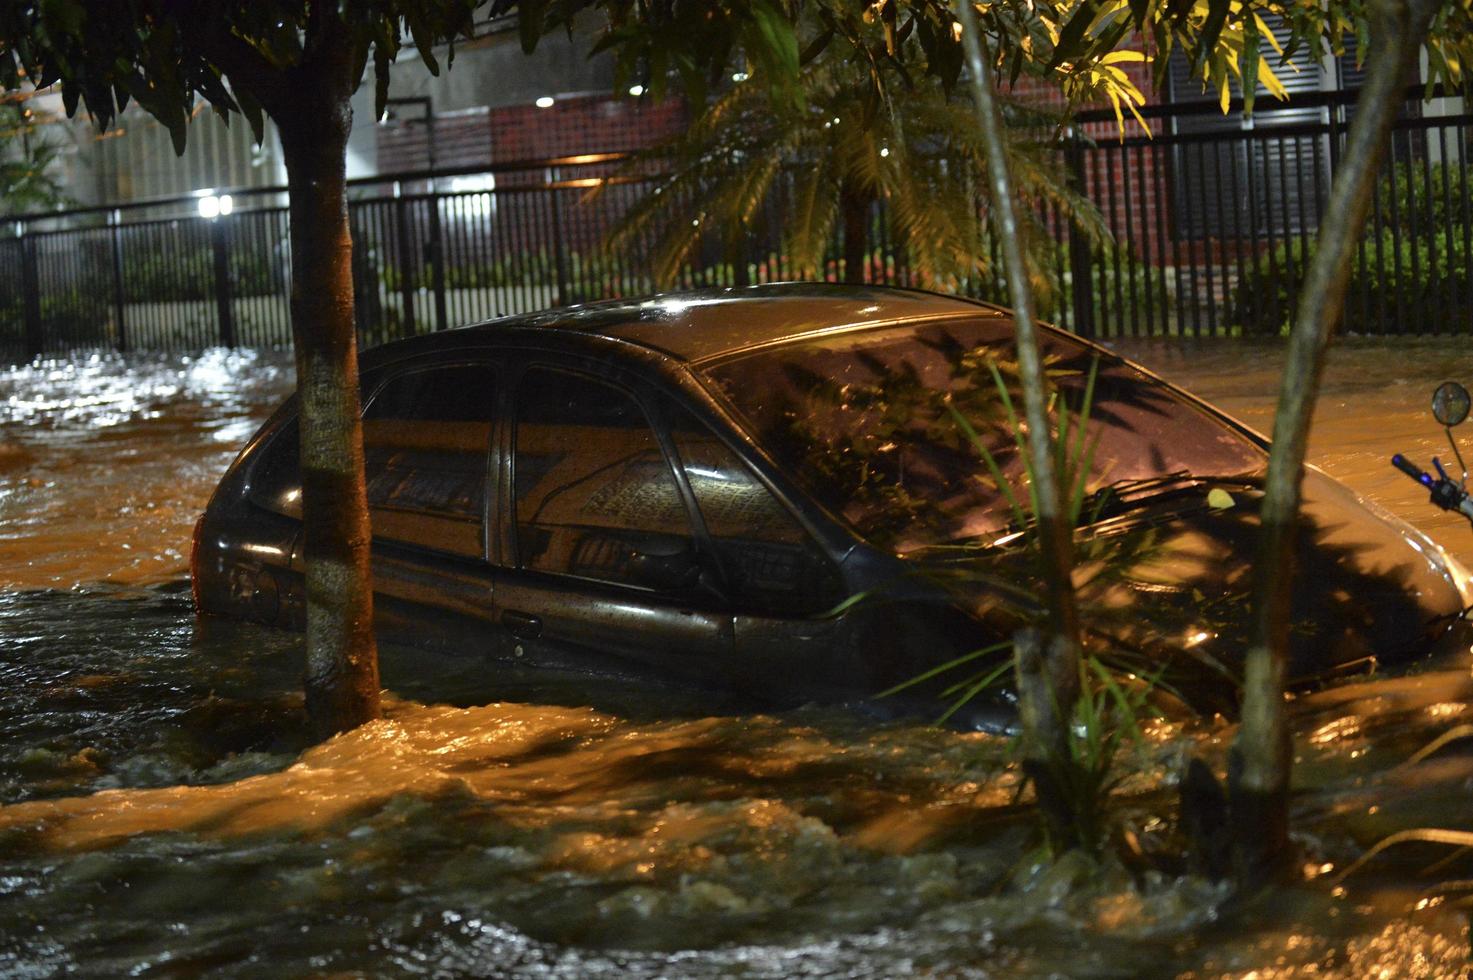 flood in the city of Rio de Janeiro photo